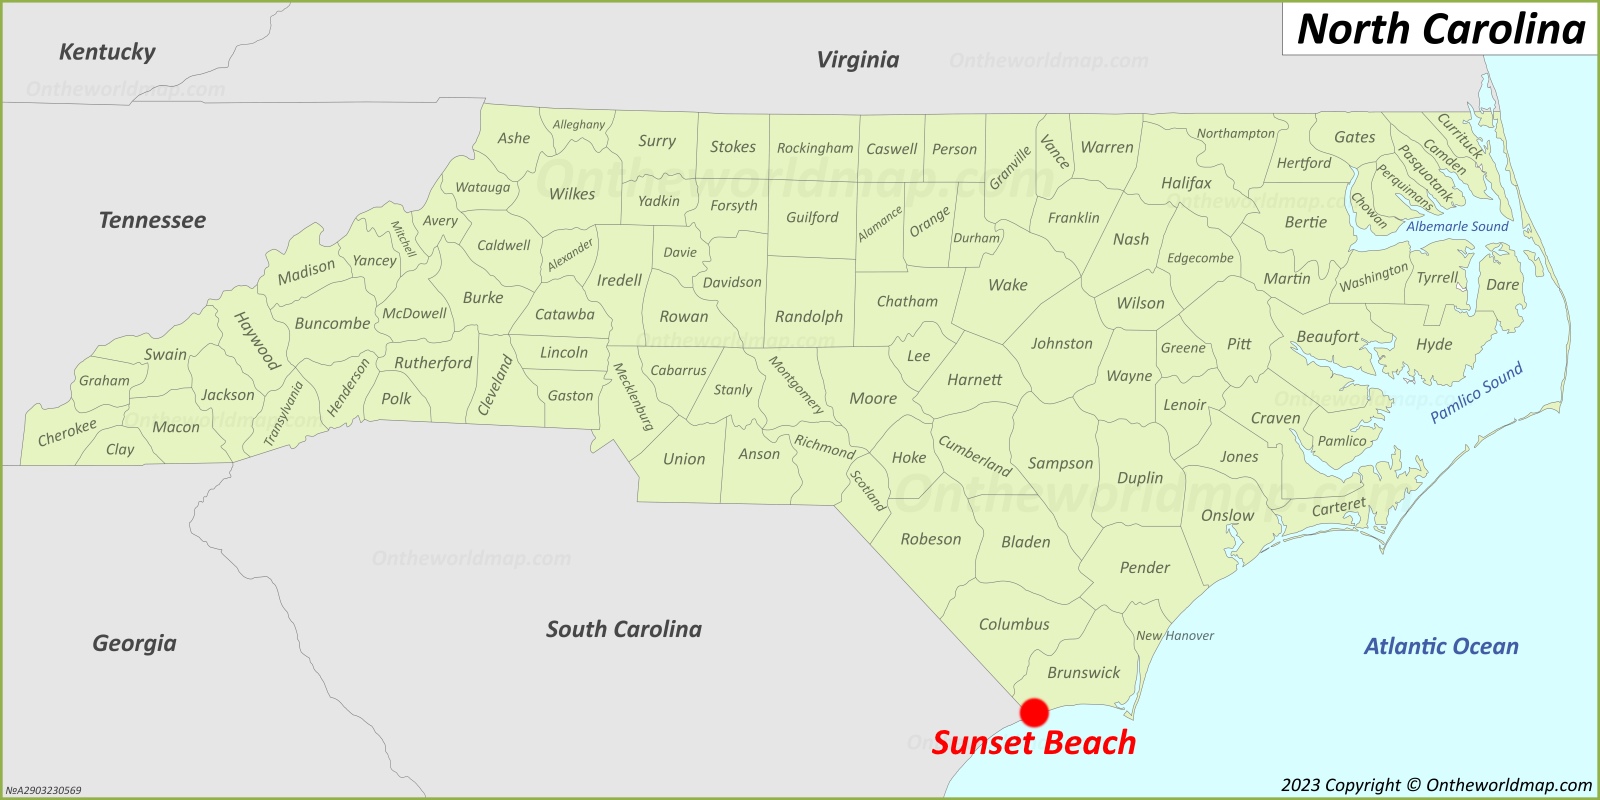 Sunset Beach Location On The North Carolina Map